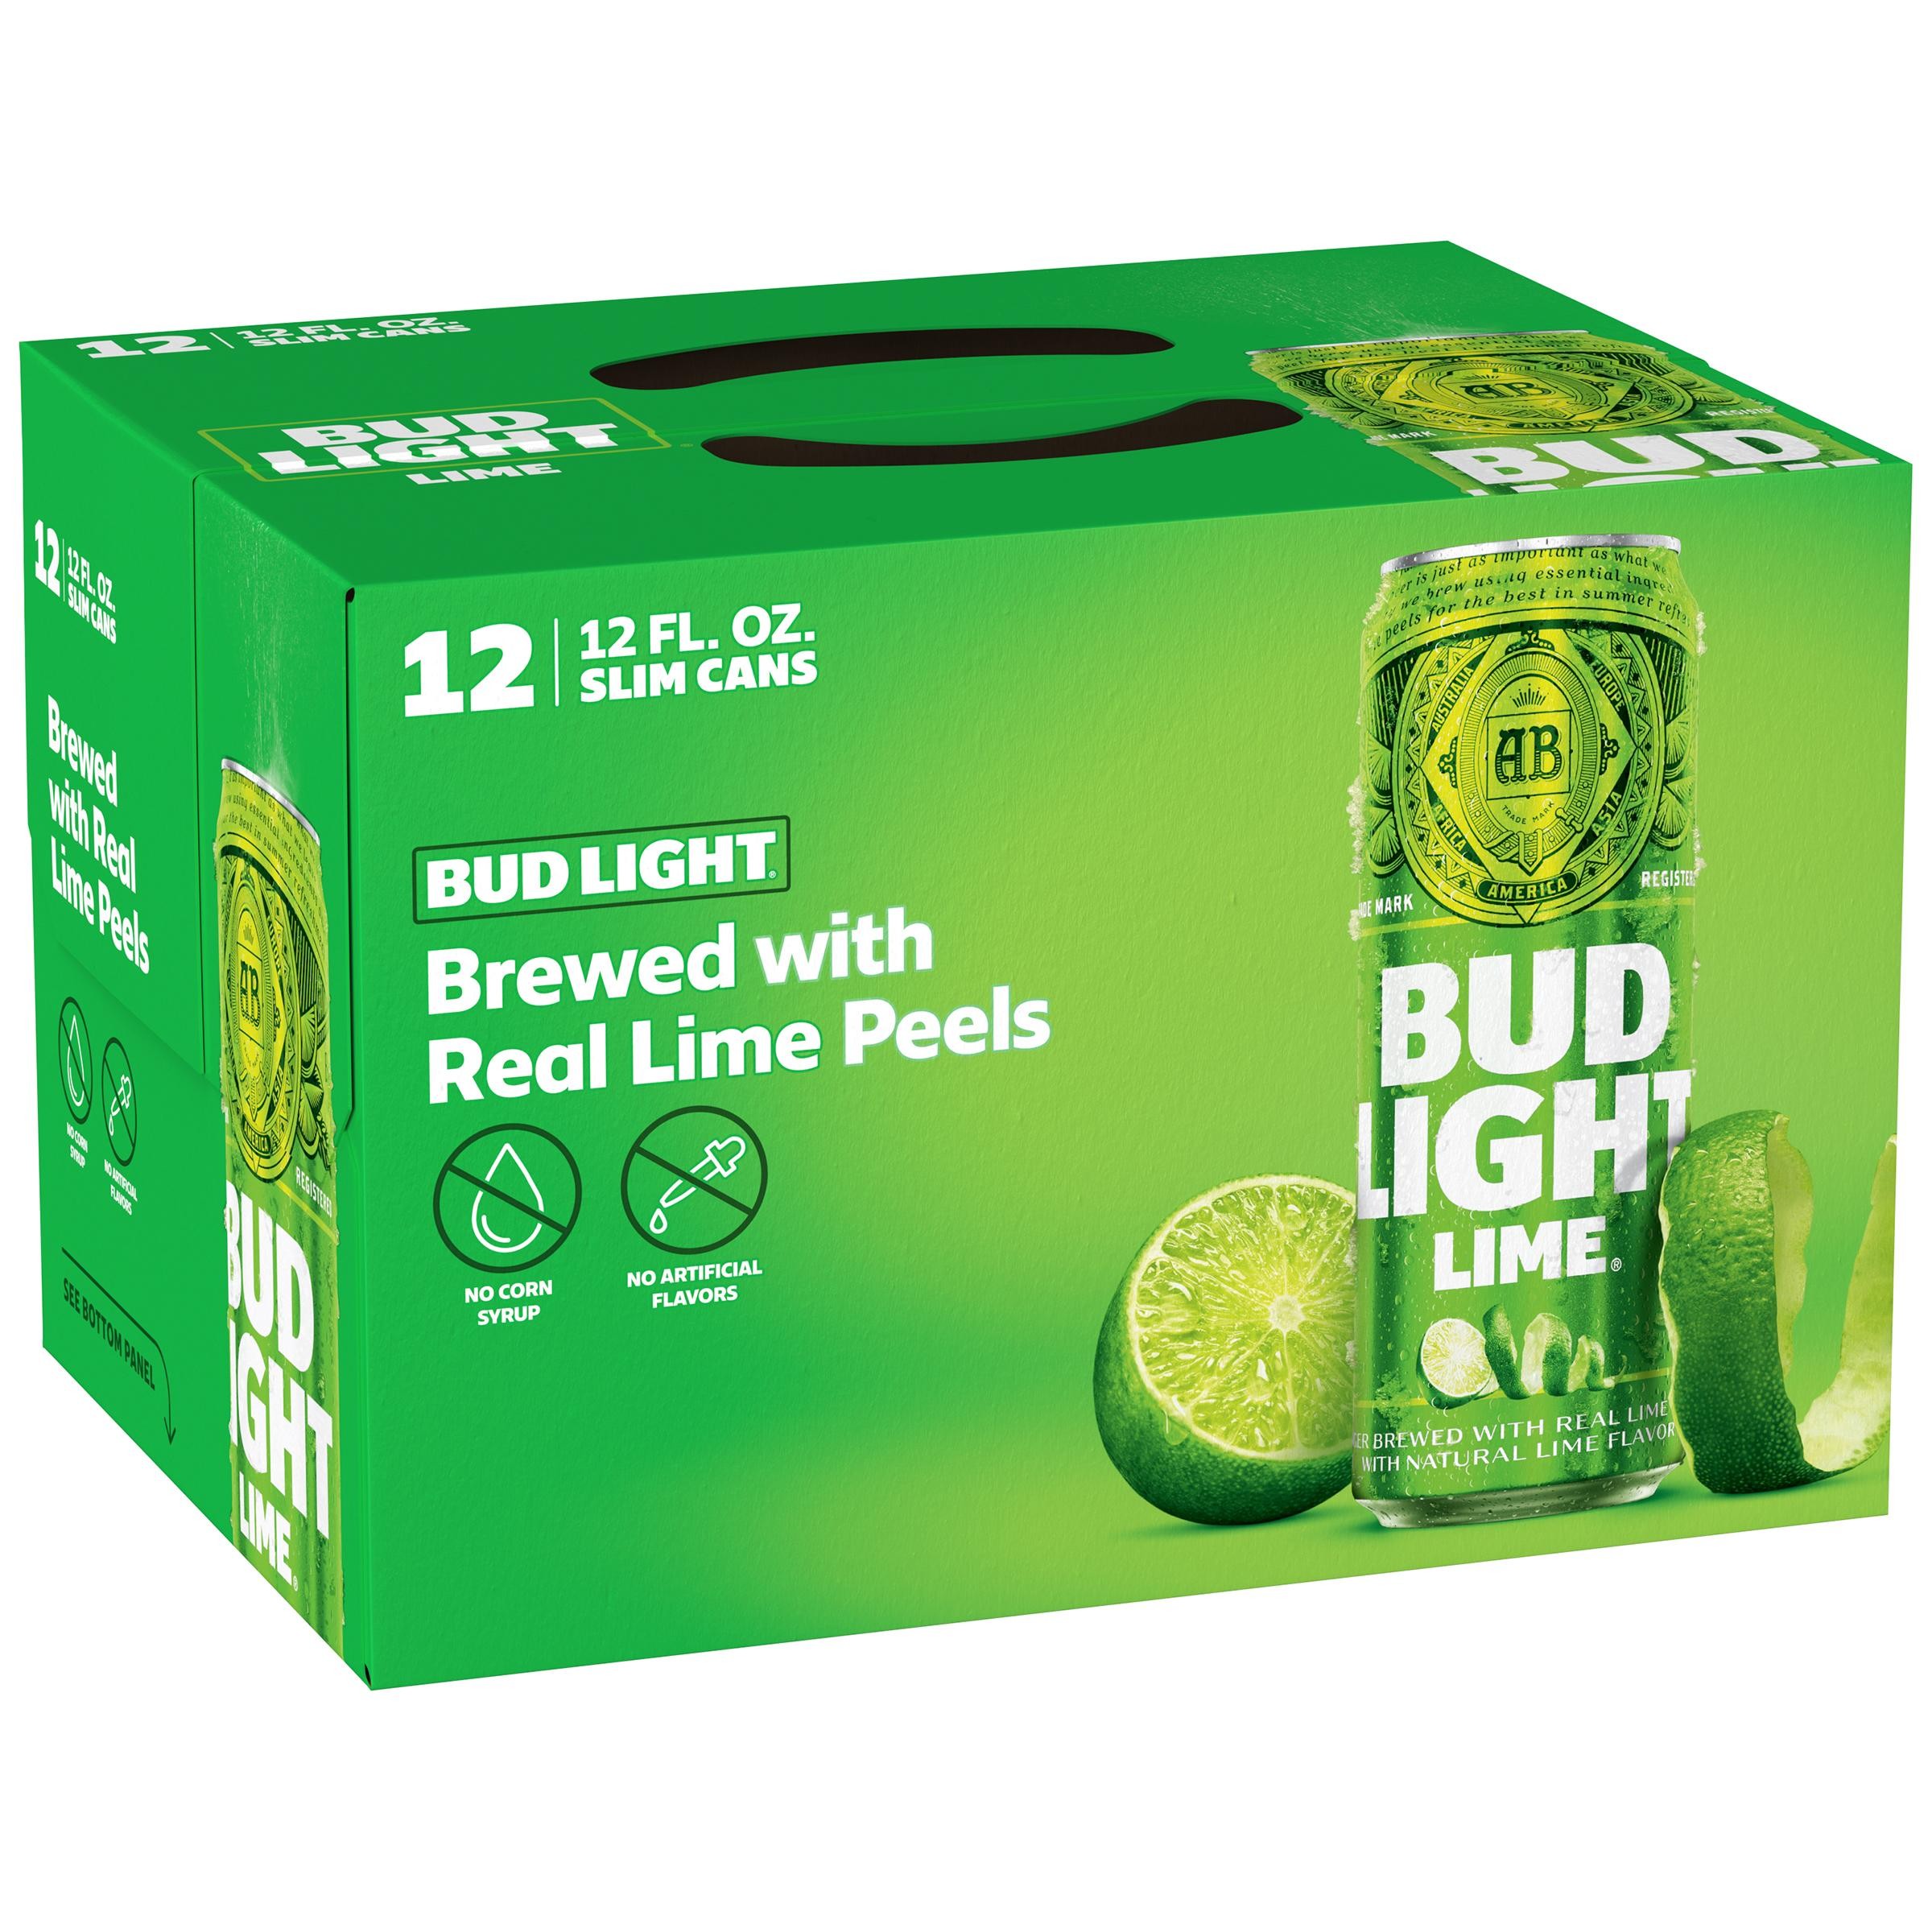 Bud Light Lime 12pk can